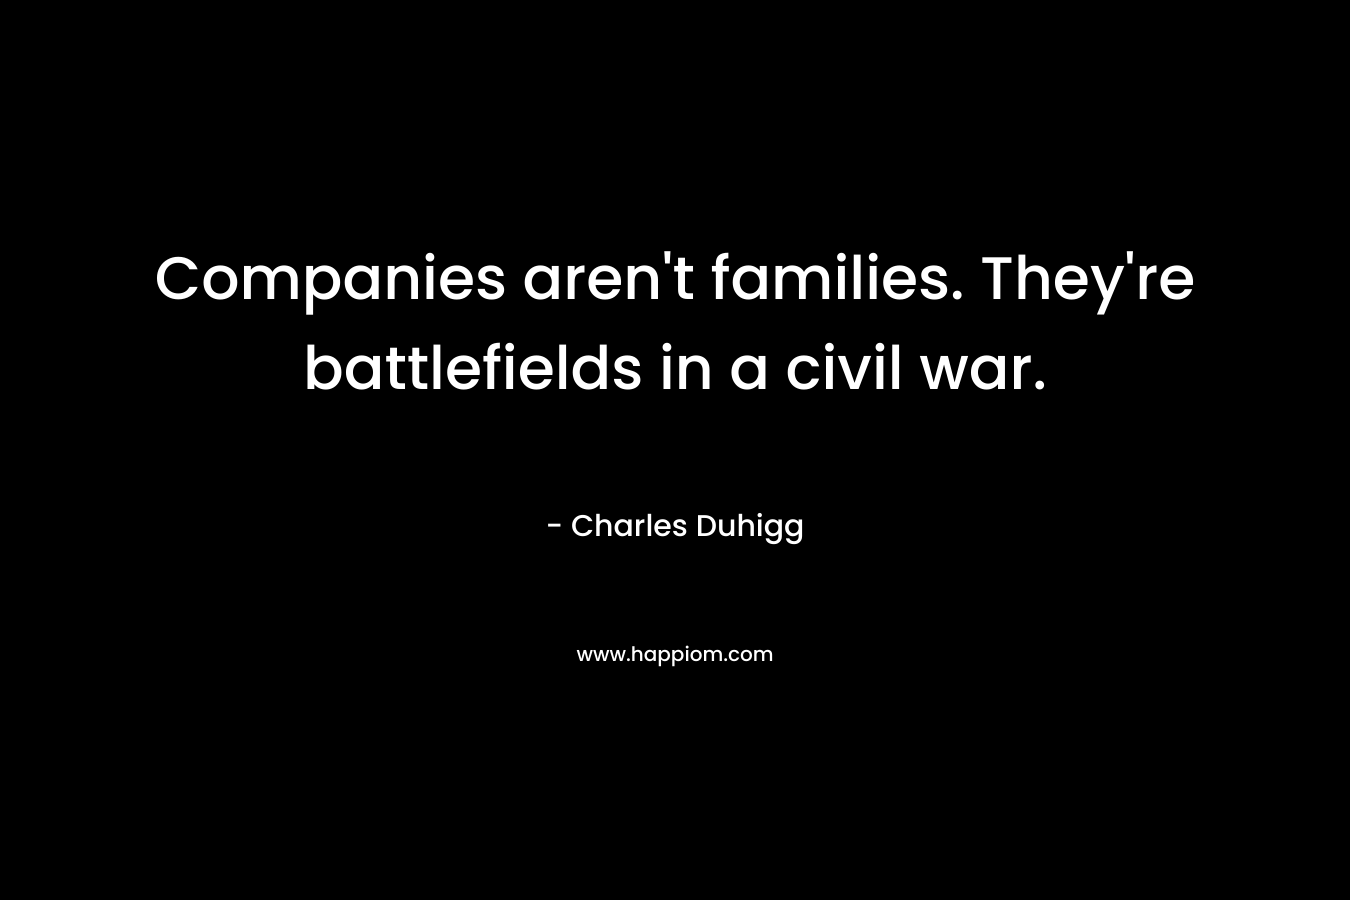 Companies aren't families. They're battlefields in a civil war.